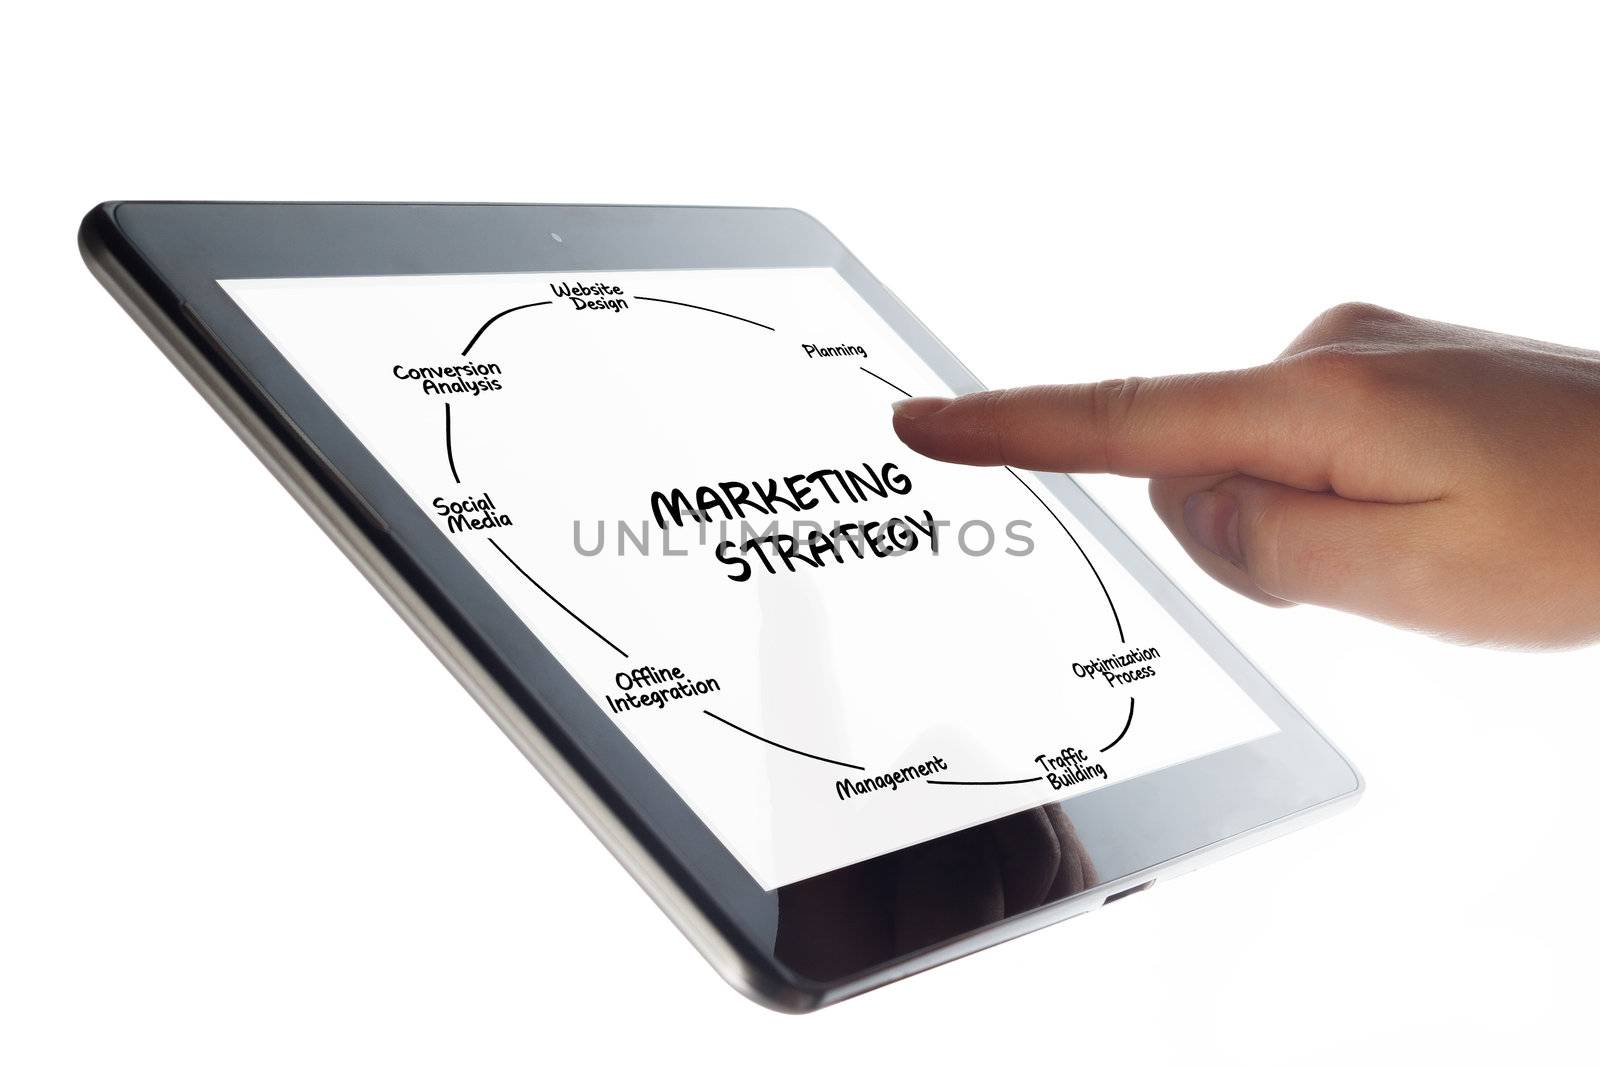 Tablet marketing strategy by Mazirama